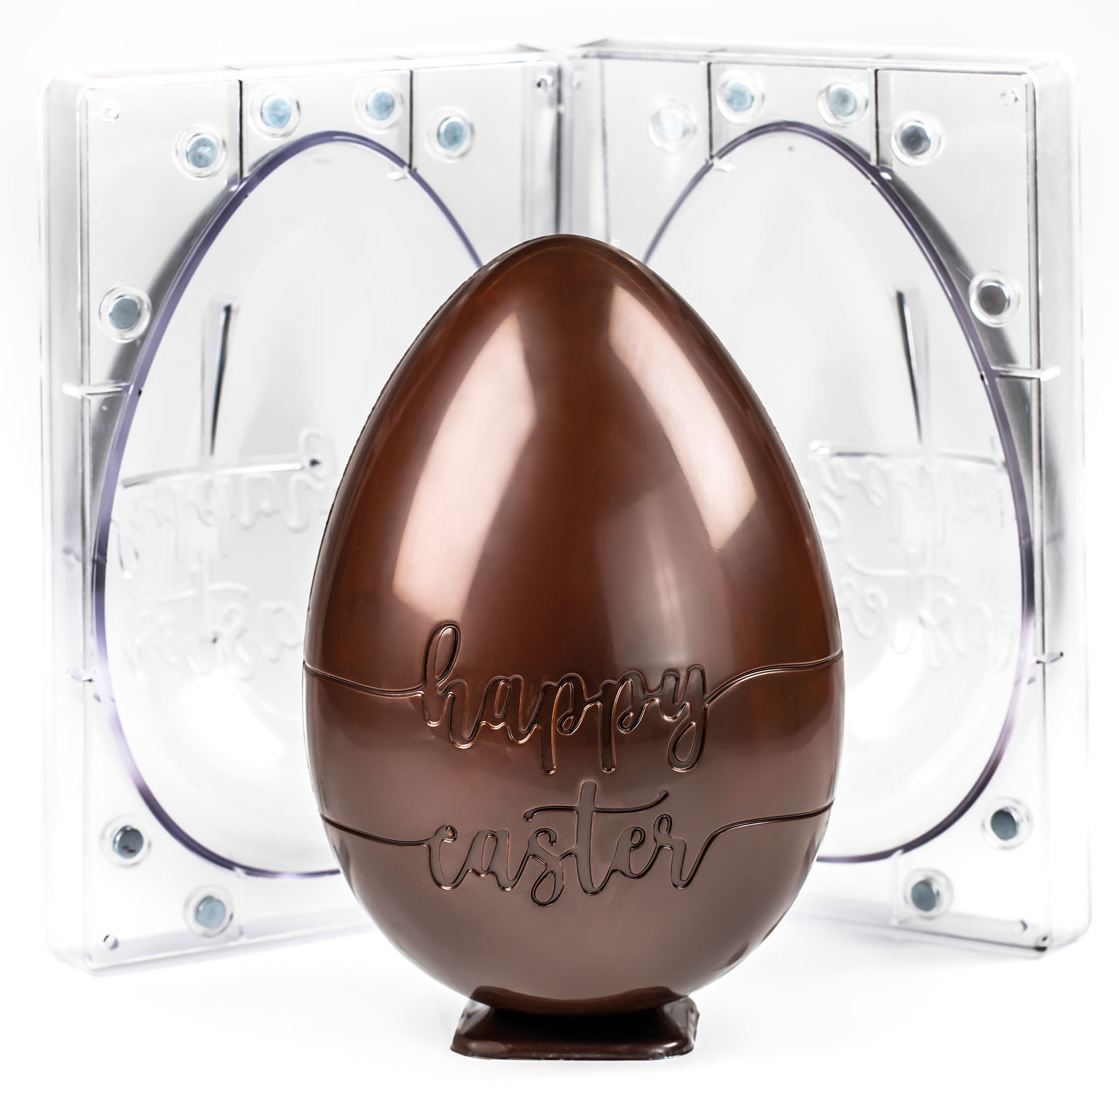 Набор поликарбонатных форм для шоколада на магните «Счастливой Пасхи» (Happy Easter) 20SR022, 2 ячейки, 22,8х15,6 см , Martellato, Италия  | Фото — Магазин Andy Chef  1